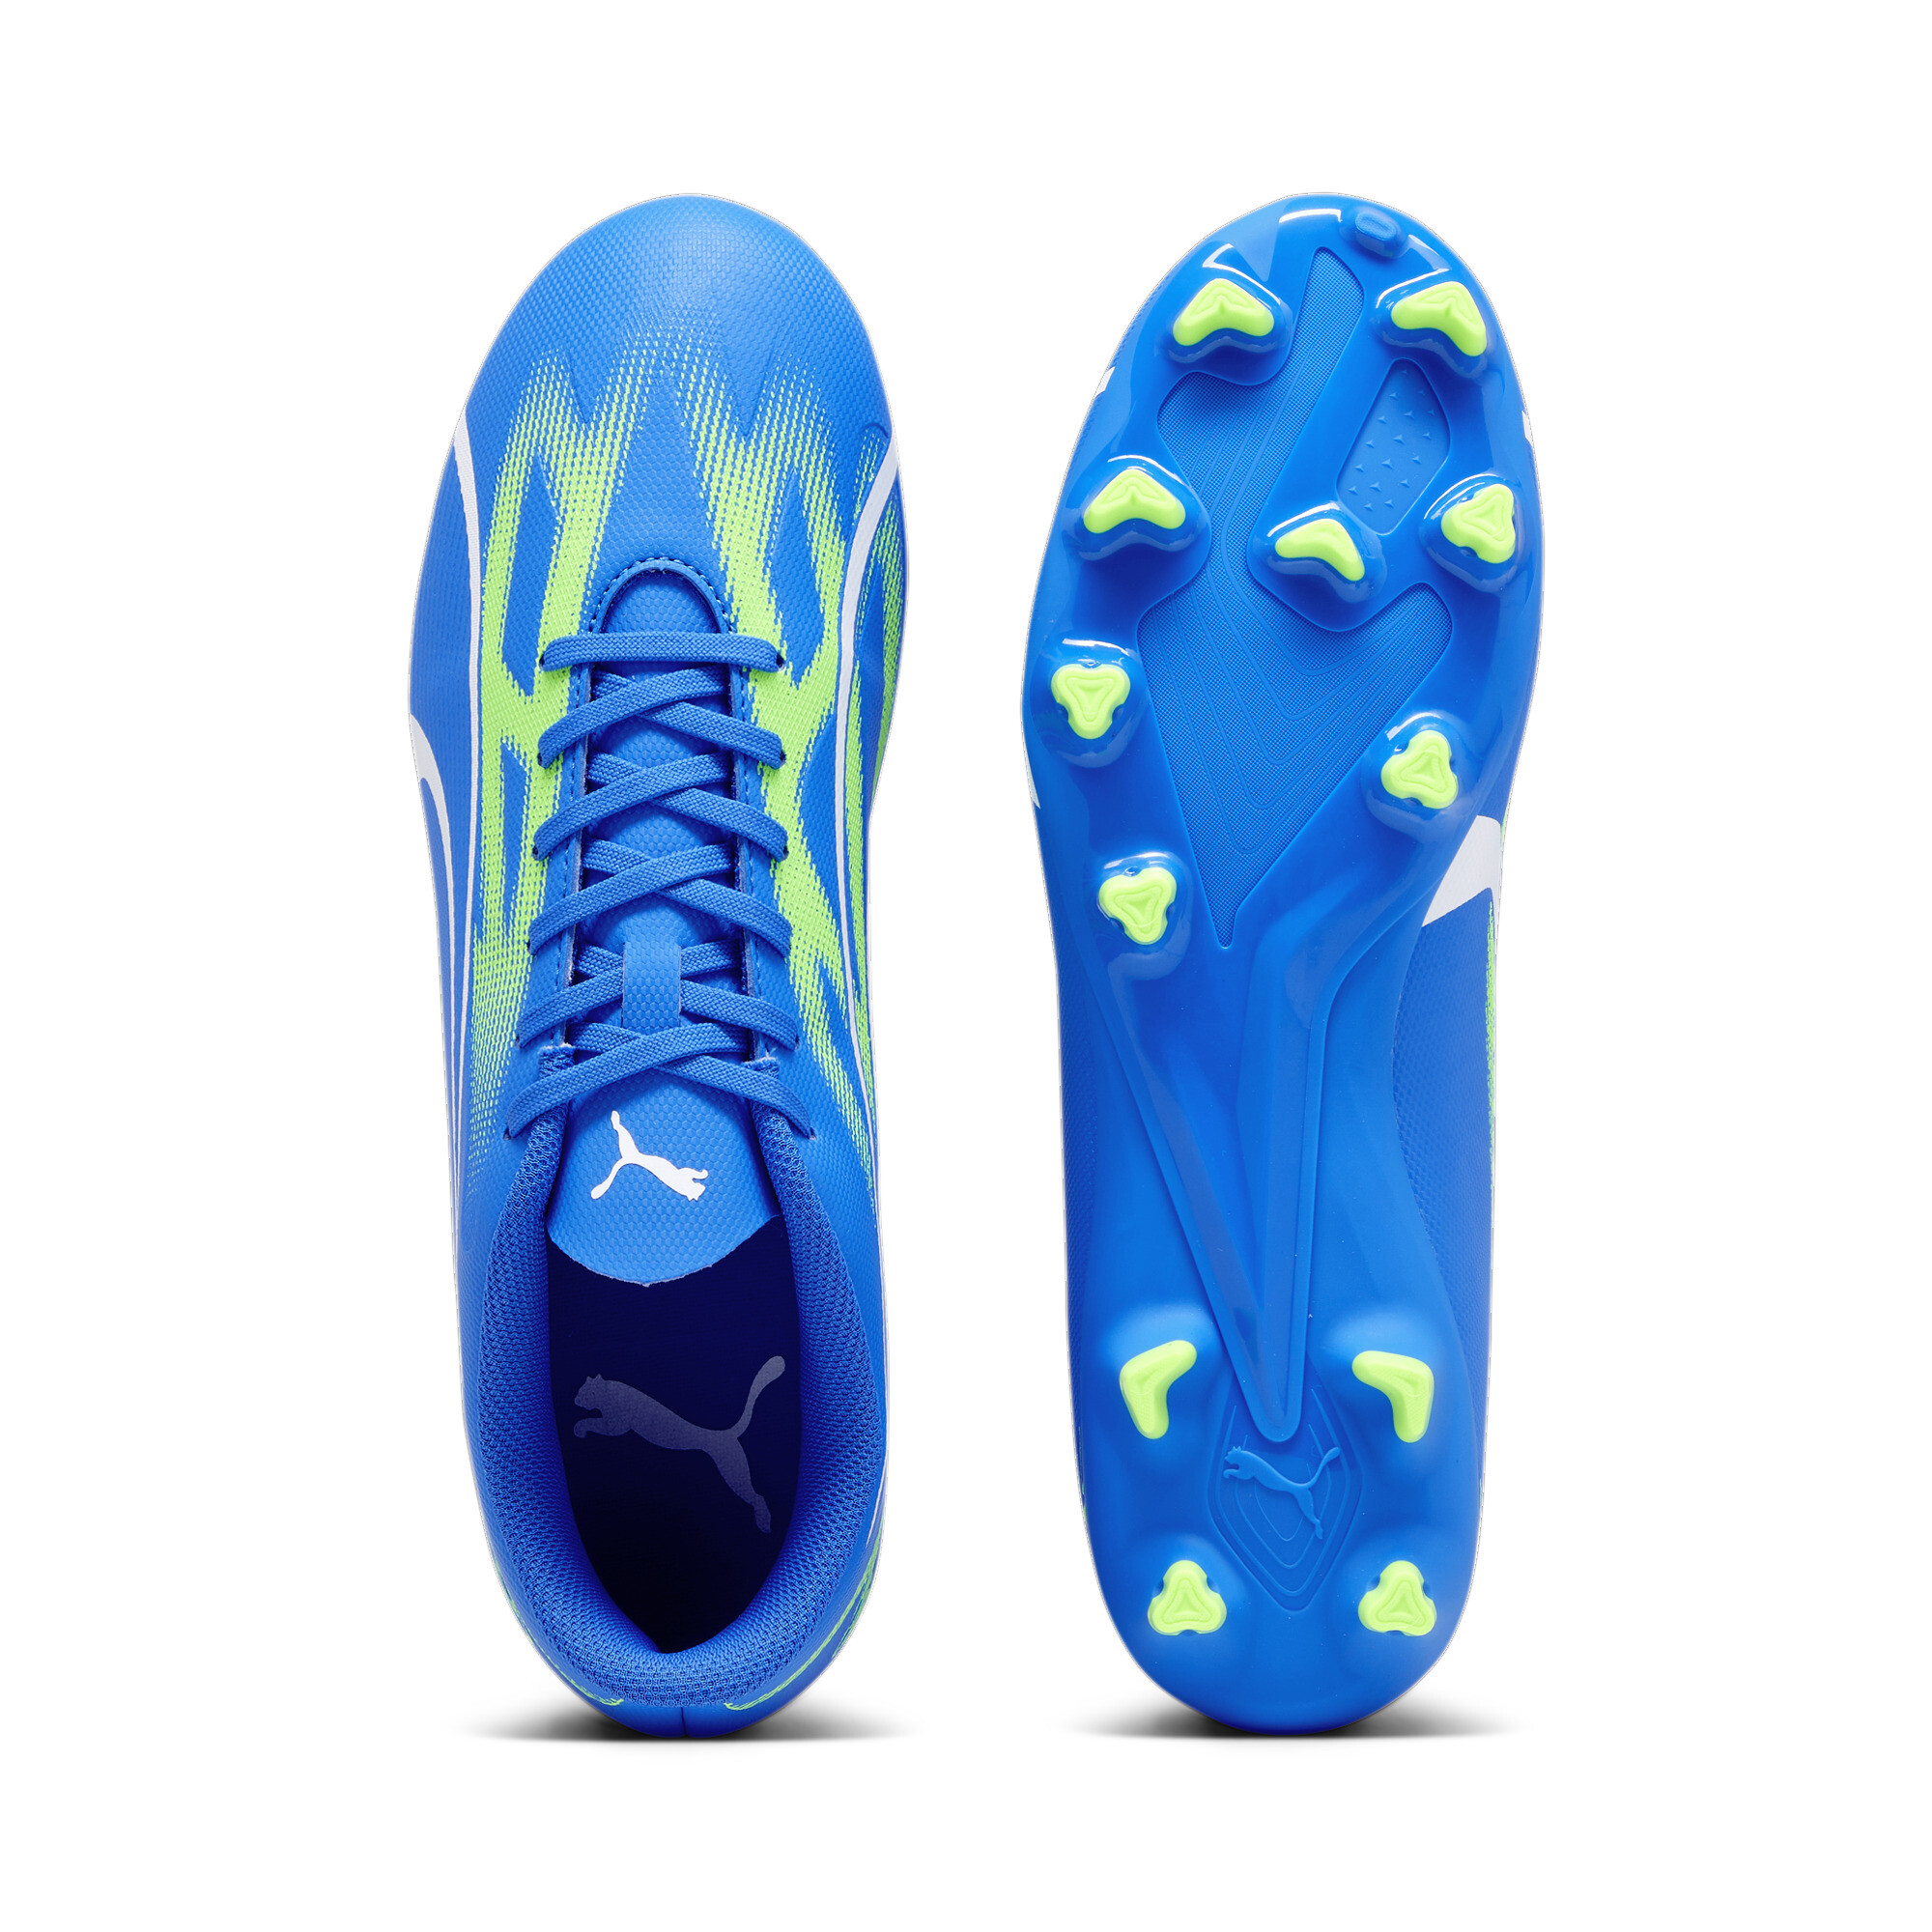 Men's PUMA ULTRA PLAY FG/AG Football Boots In Blue, Size EU 46